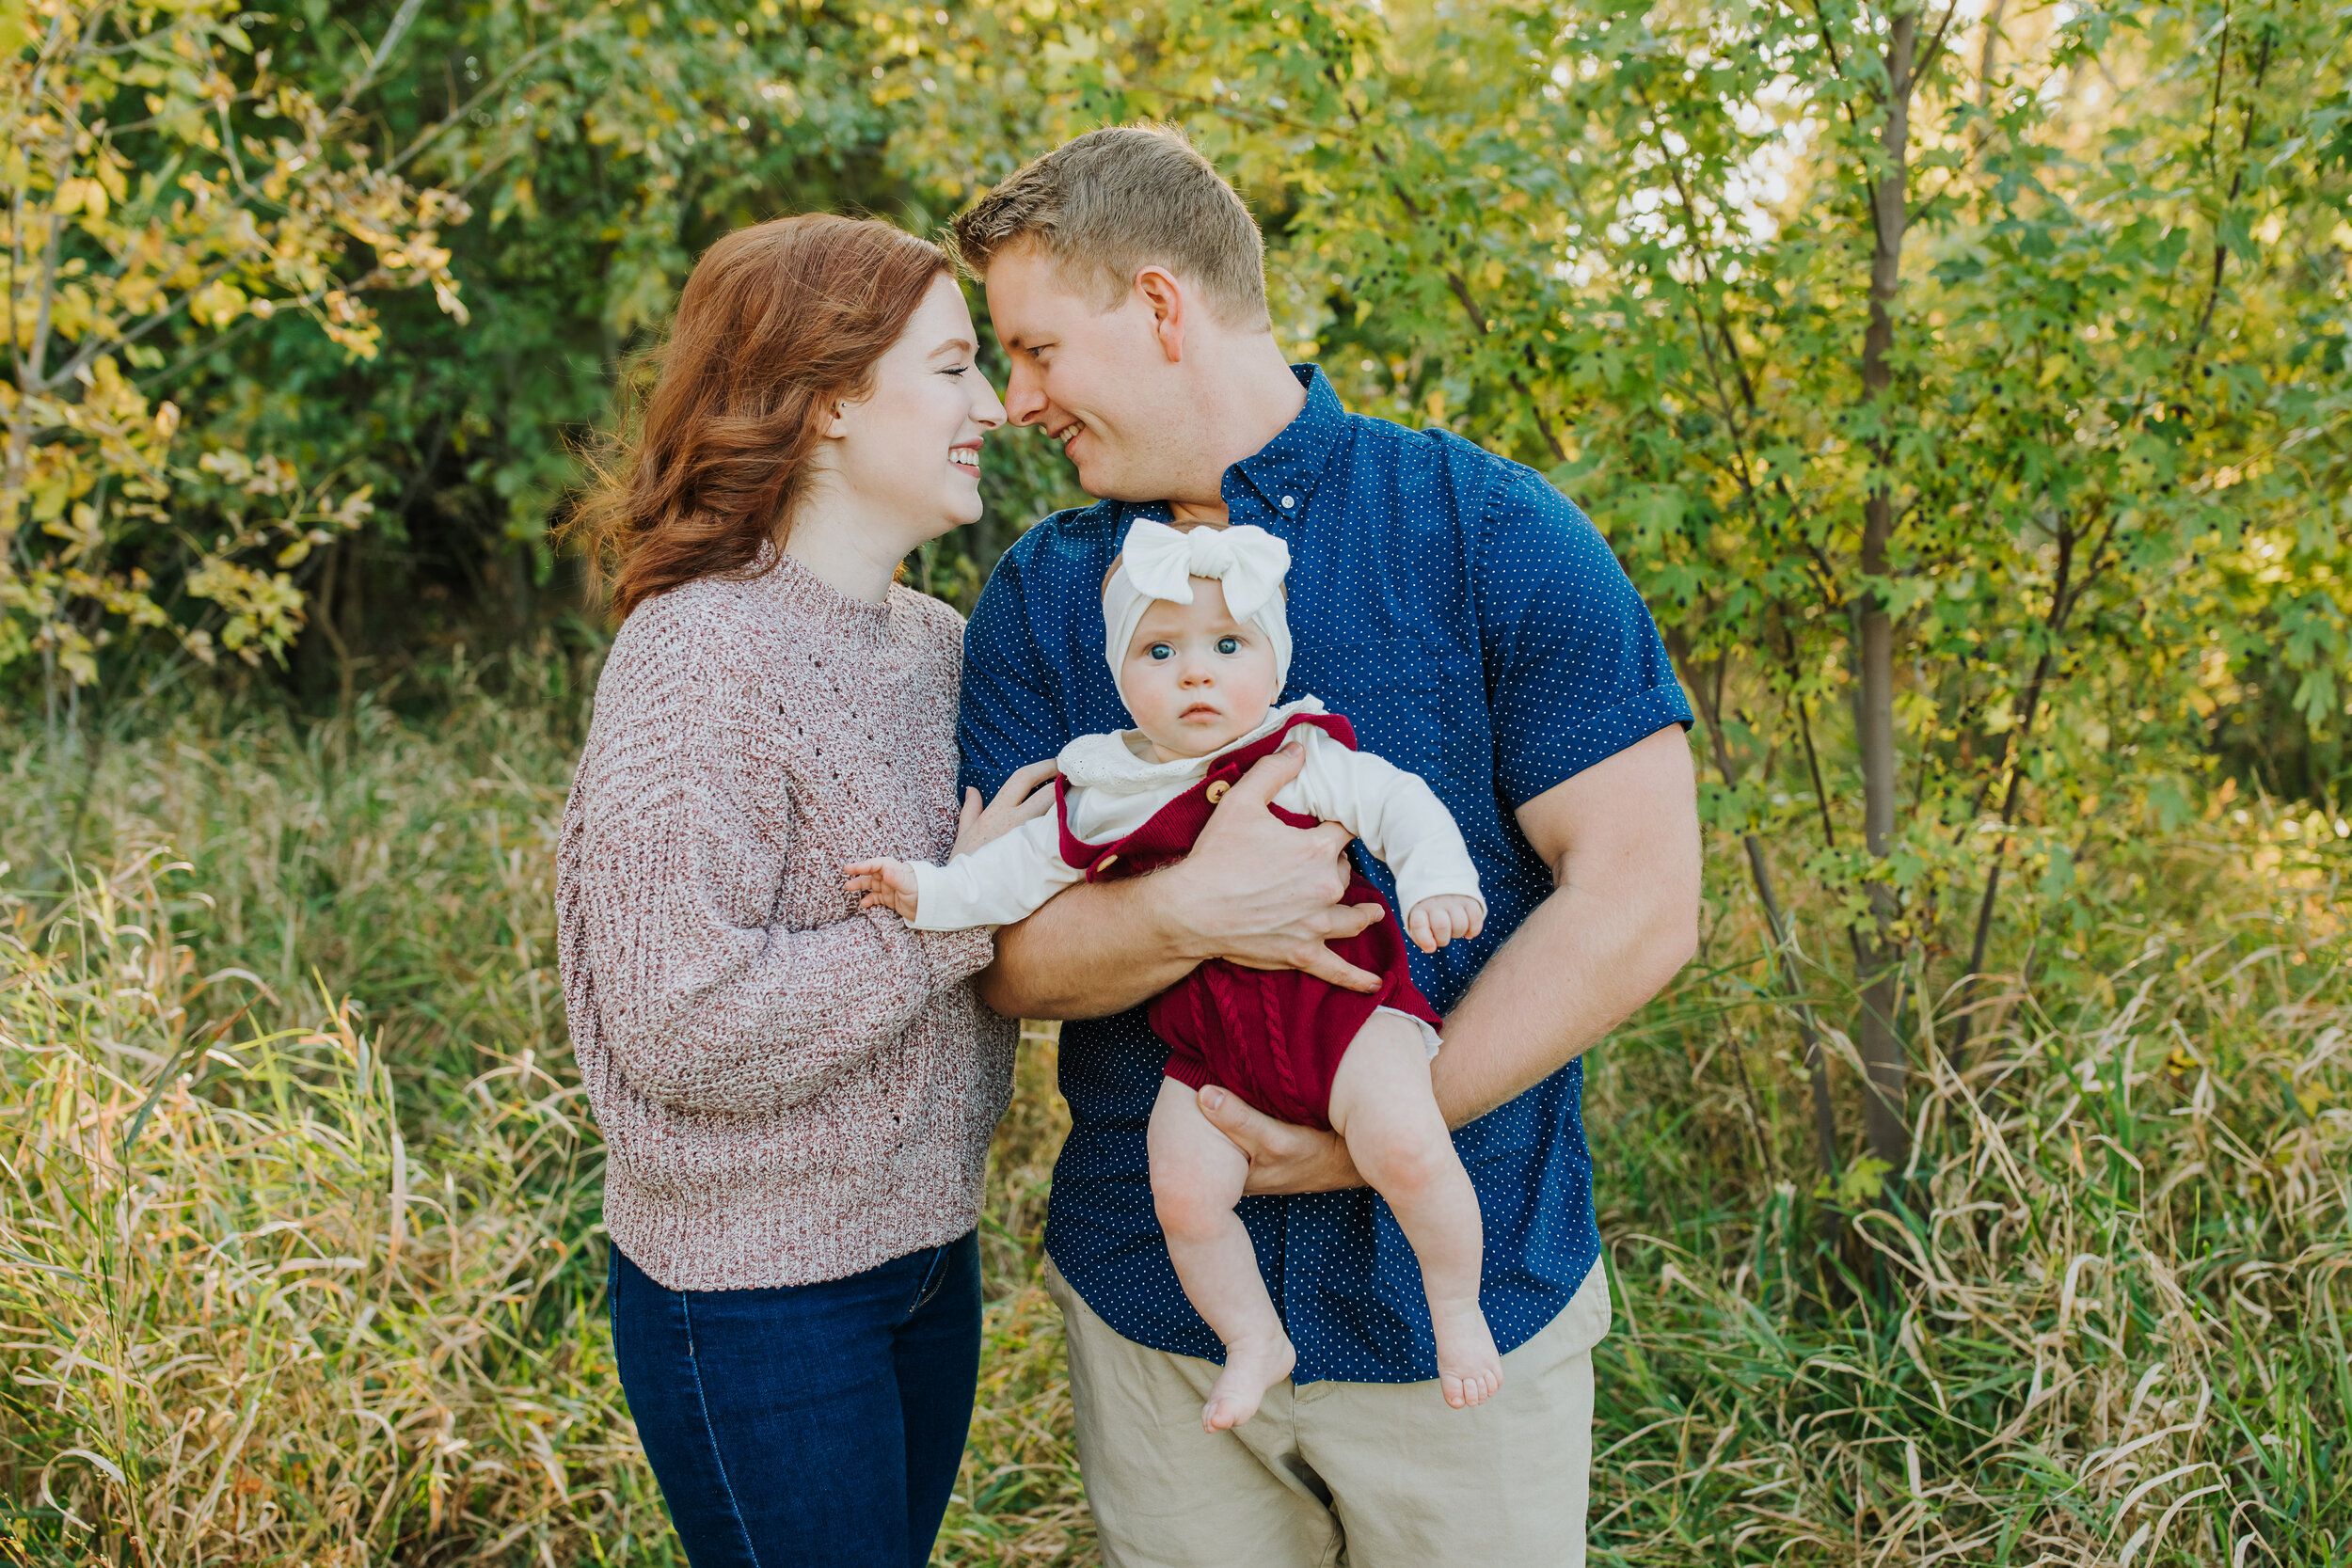 Unger Family Photos 2020 - Nathaniel Jensen Photography - Omaha Nebraska Family Photographer-6.jpg